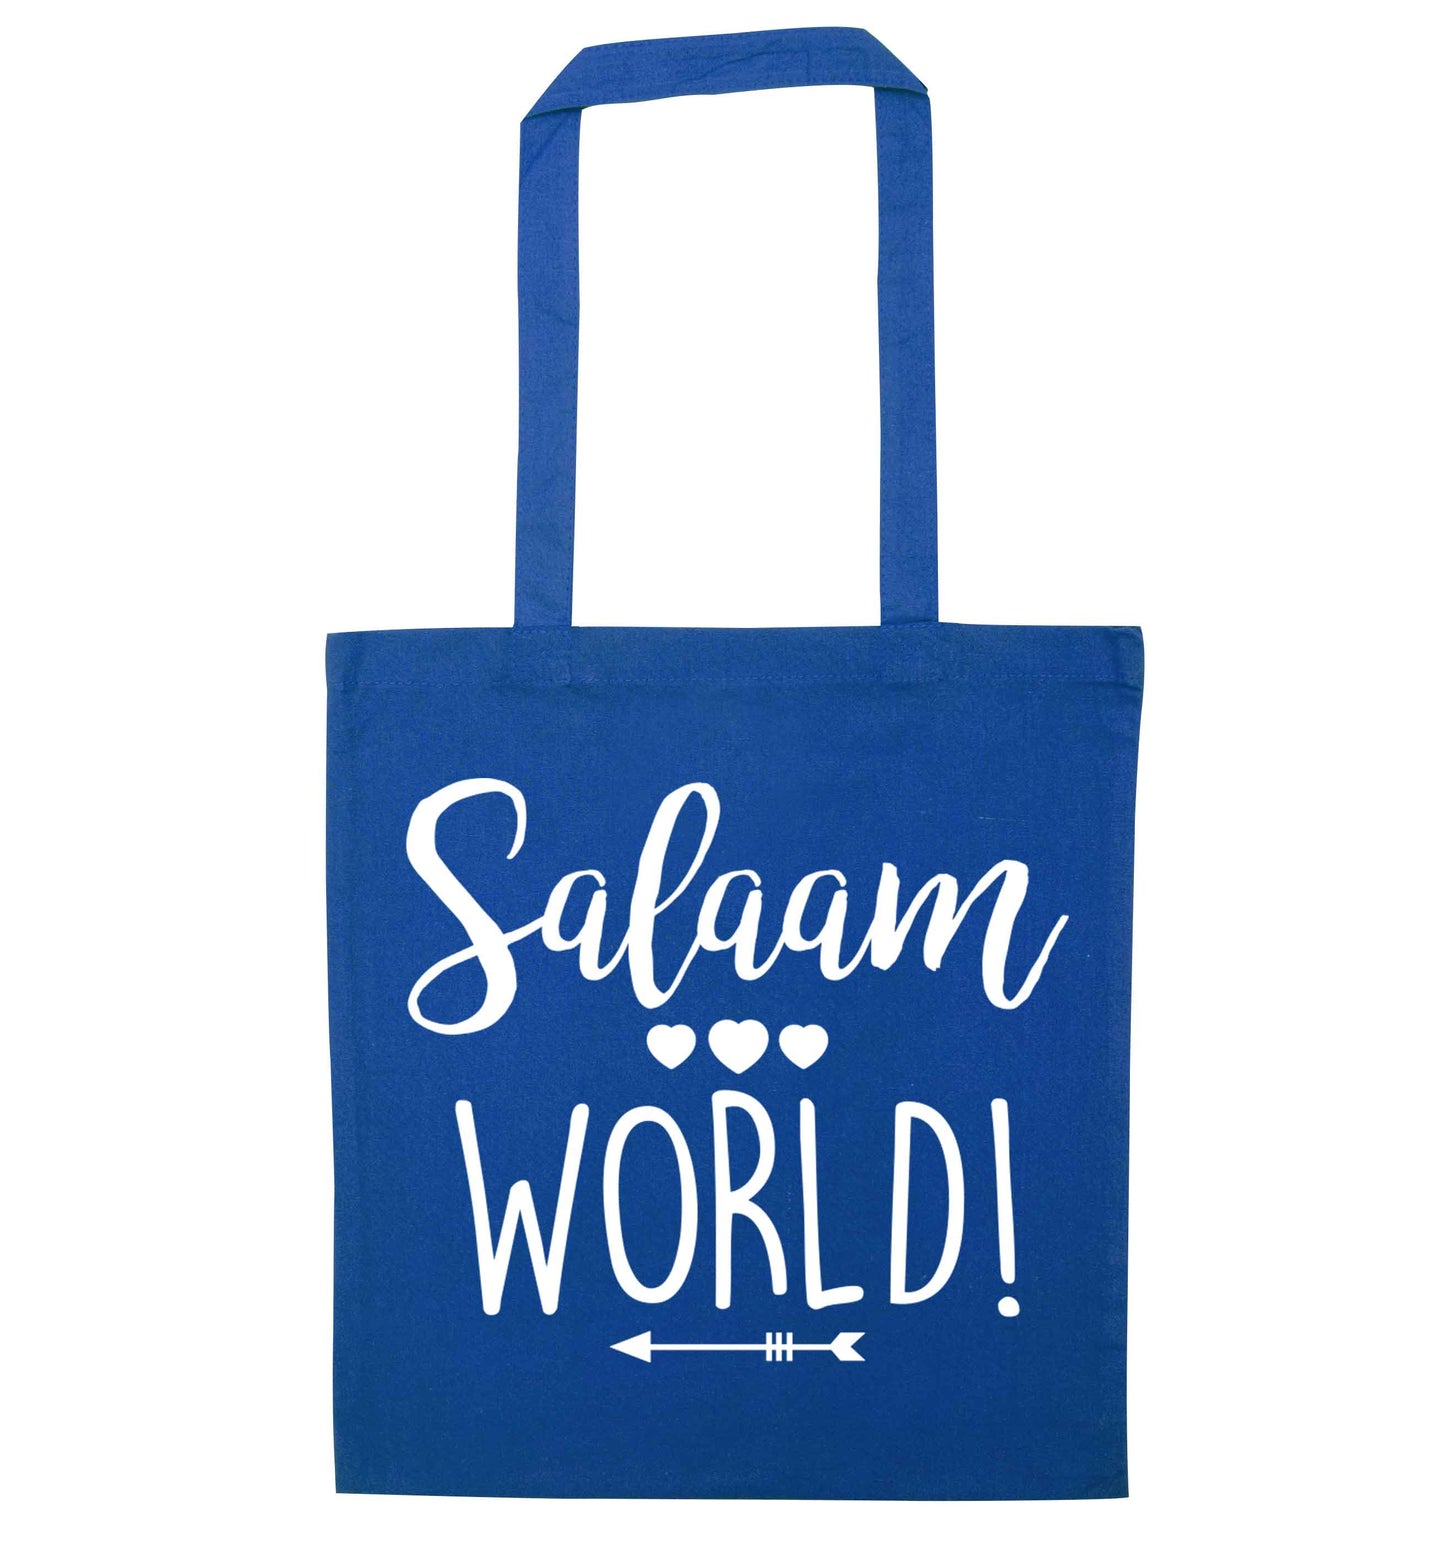 Salaam world blue tote bag